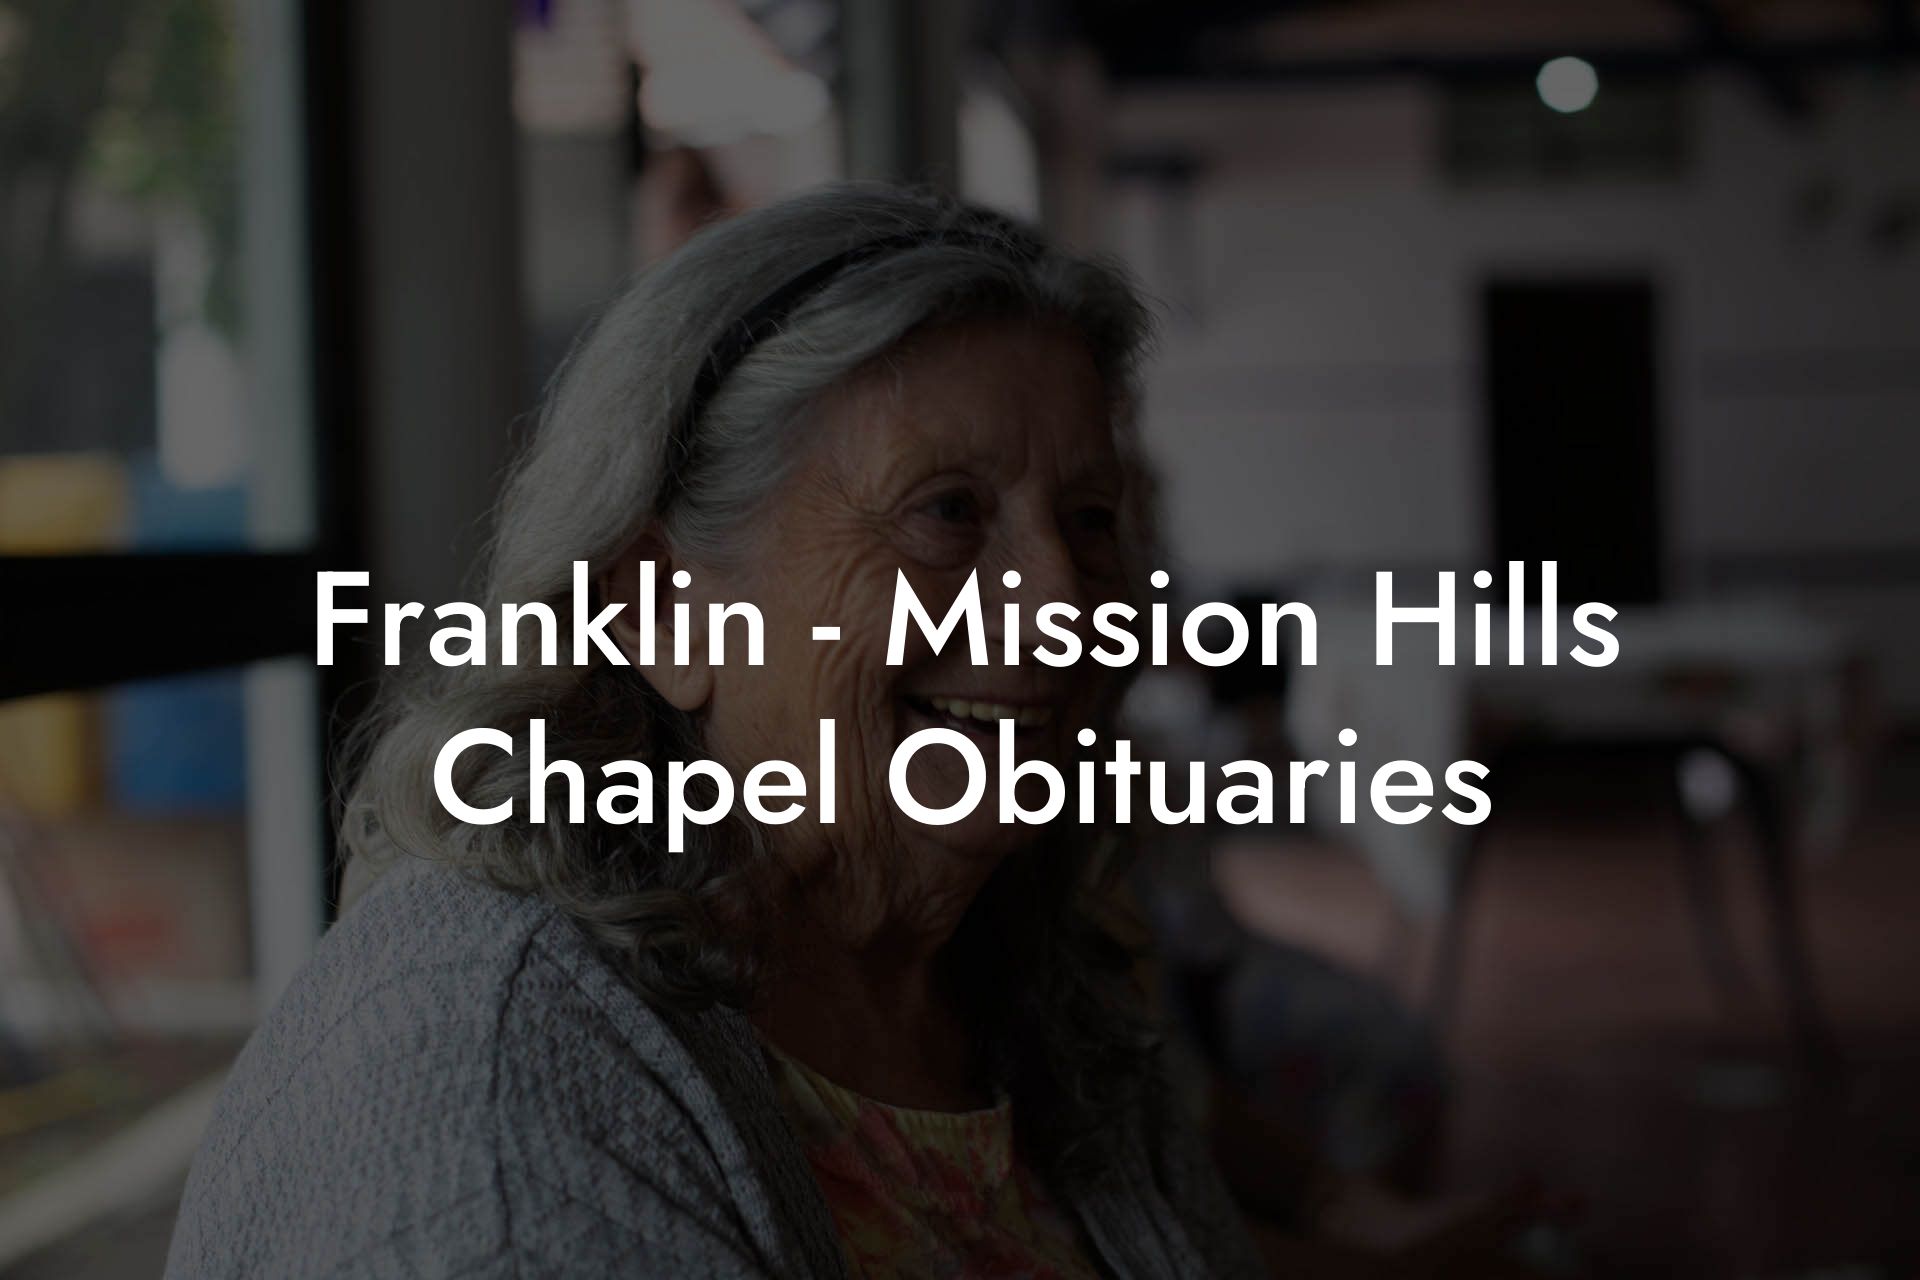 Franklin - Mission Hills Chapel Obituaries